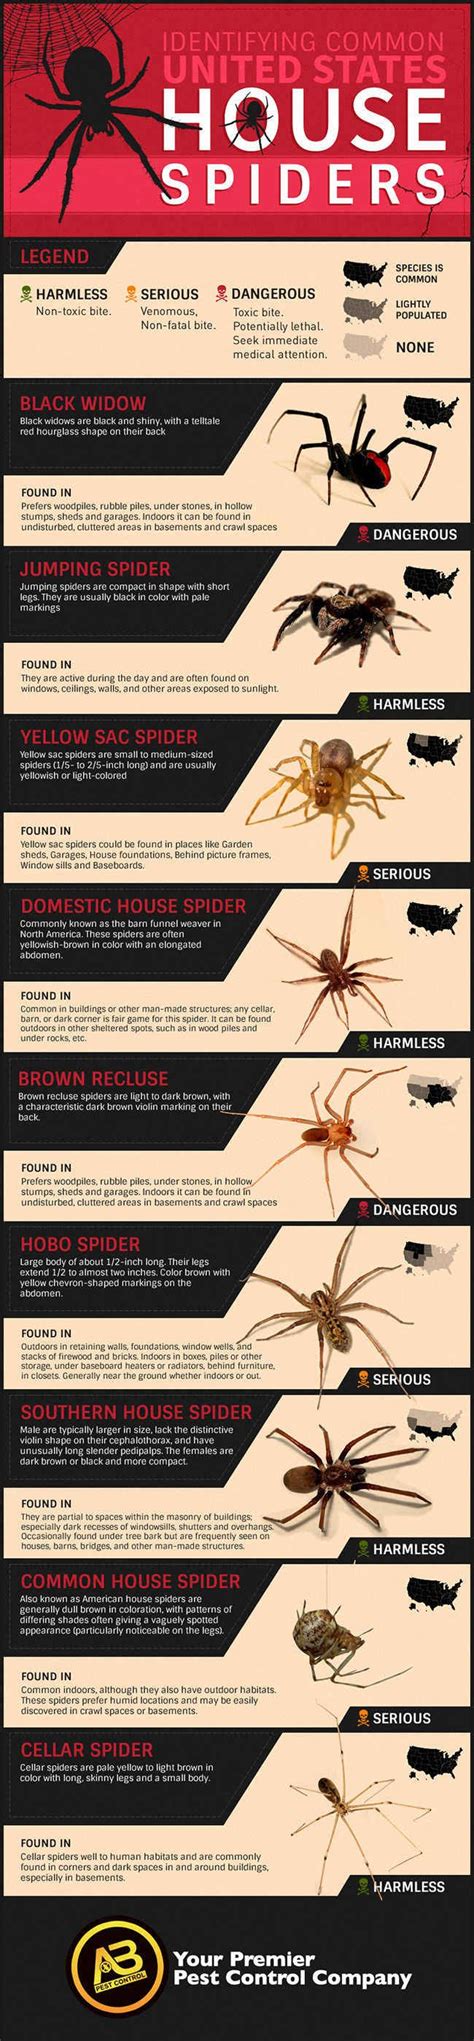 11 Best Spider Bite Images On Pinterest Health Spider Bites And